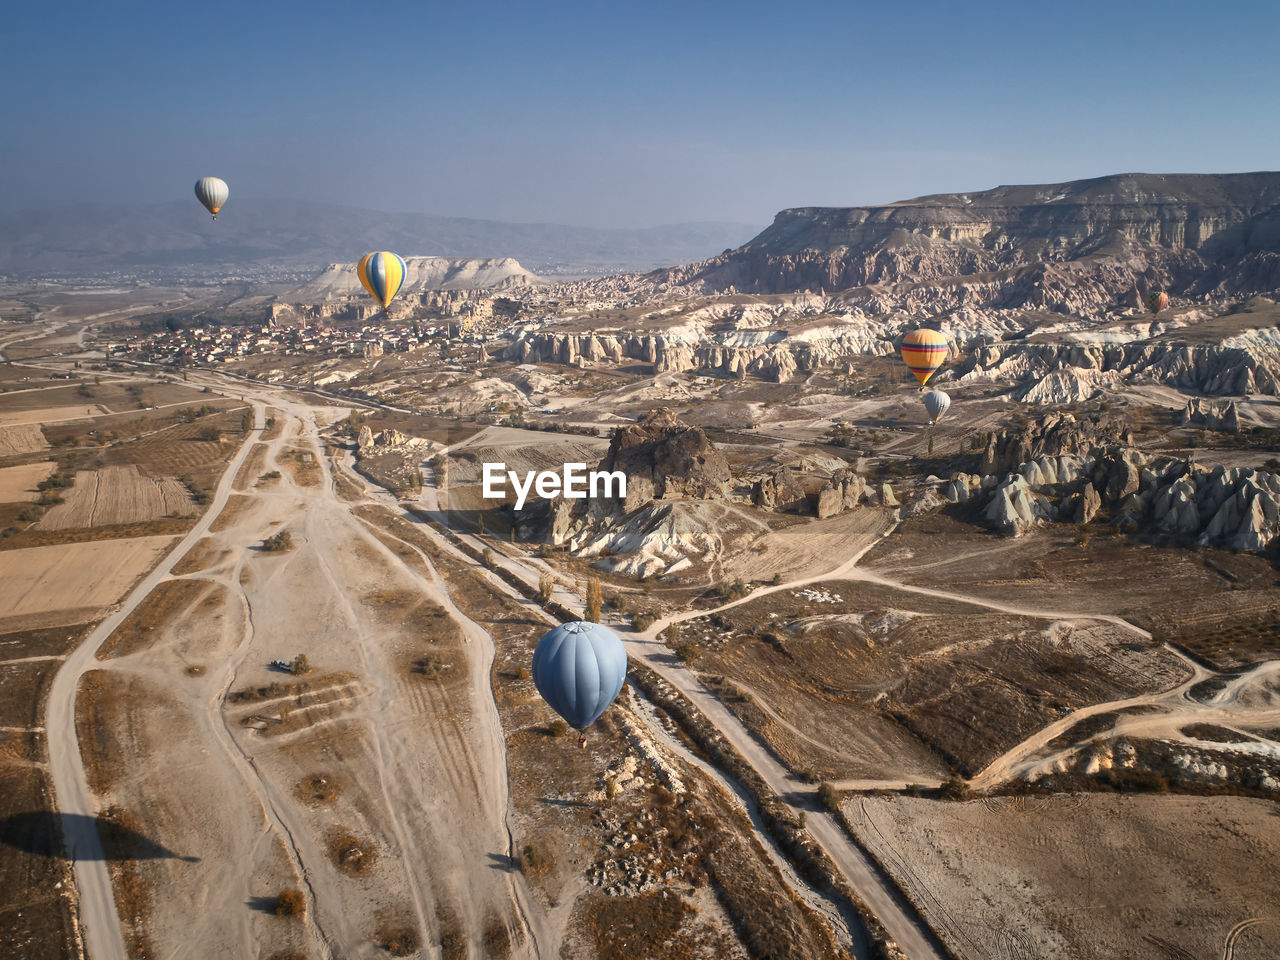 Colorful hot air balloons at goreme national park, cappadocia, turkey. aerial view